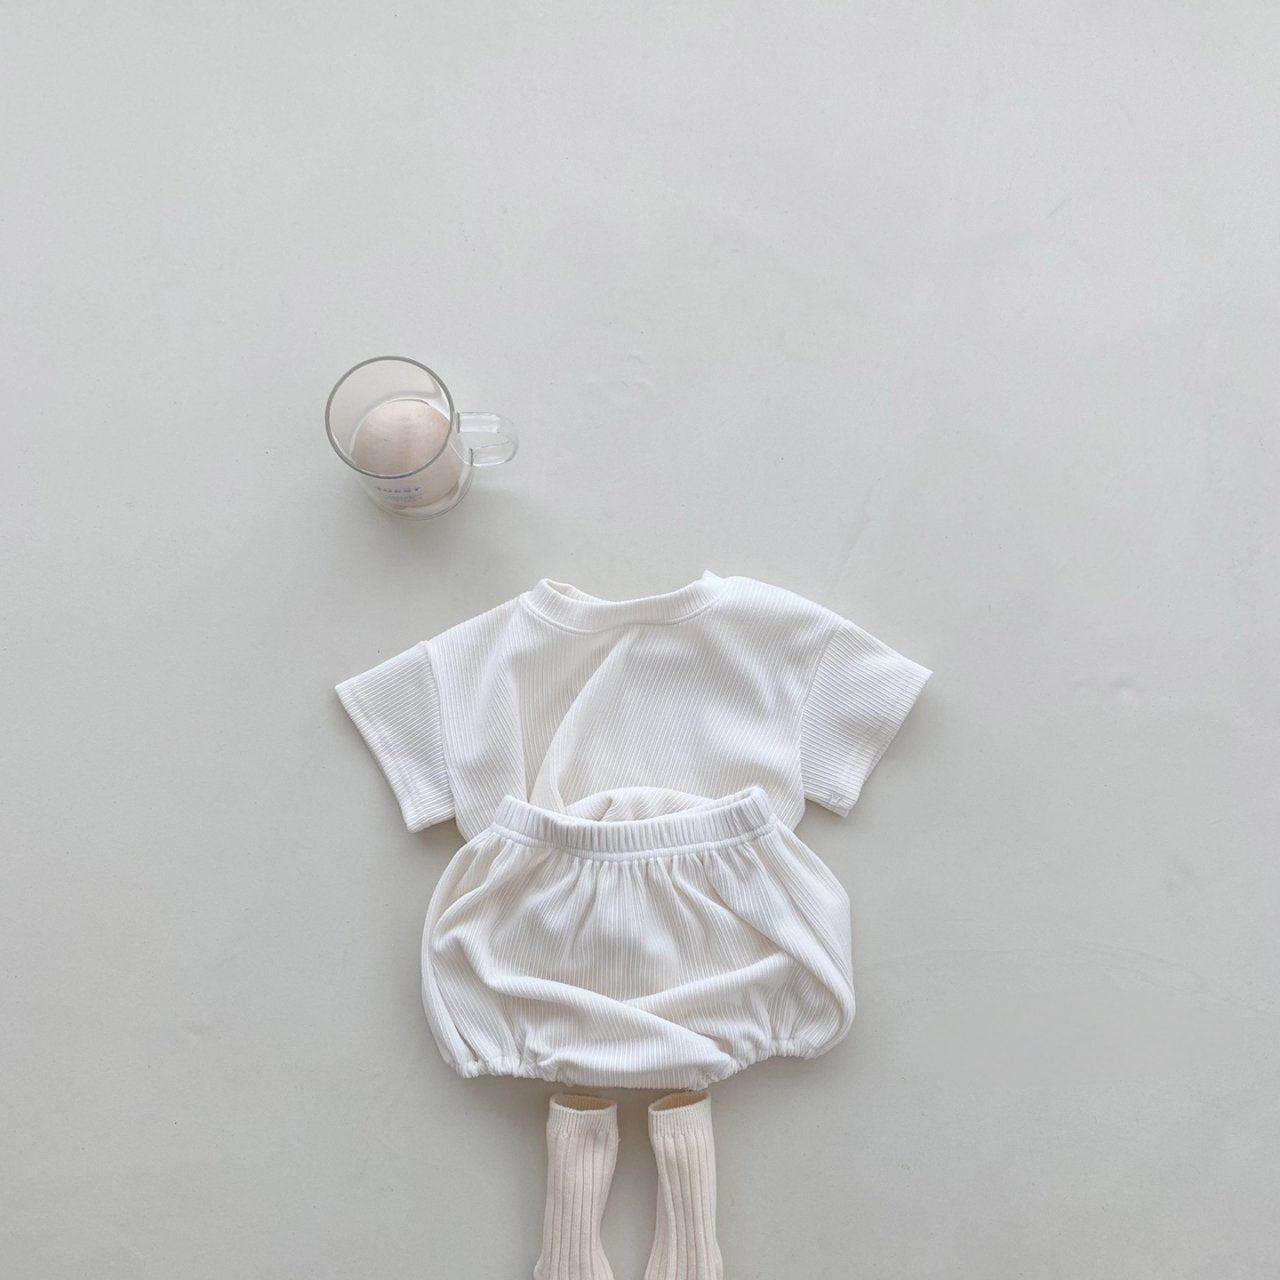  Adorable Lennox Baby Set for Stylish Infants